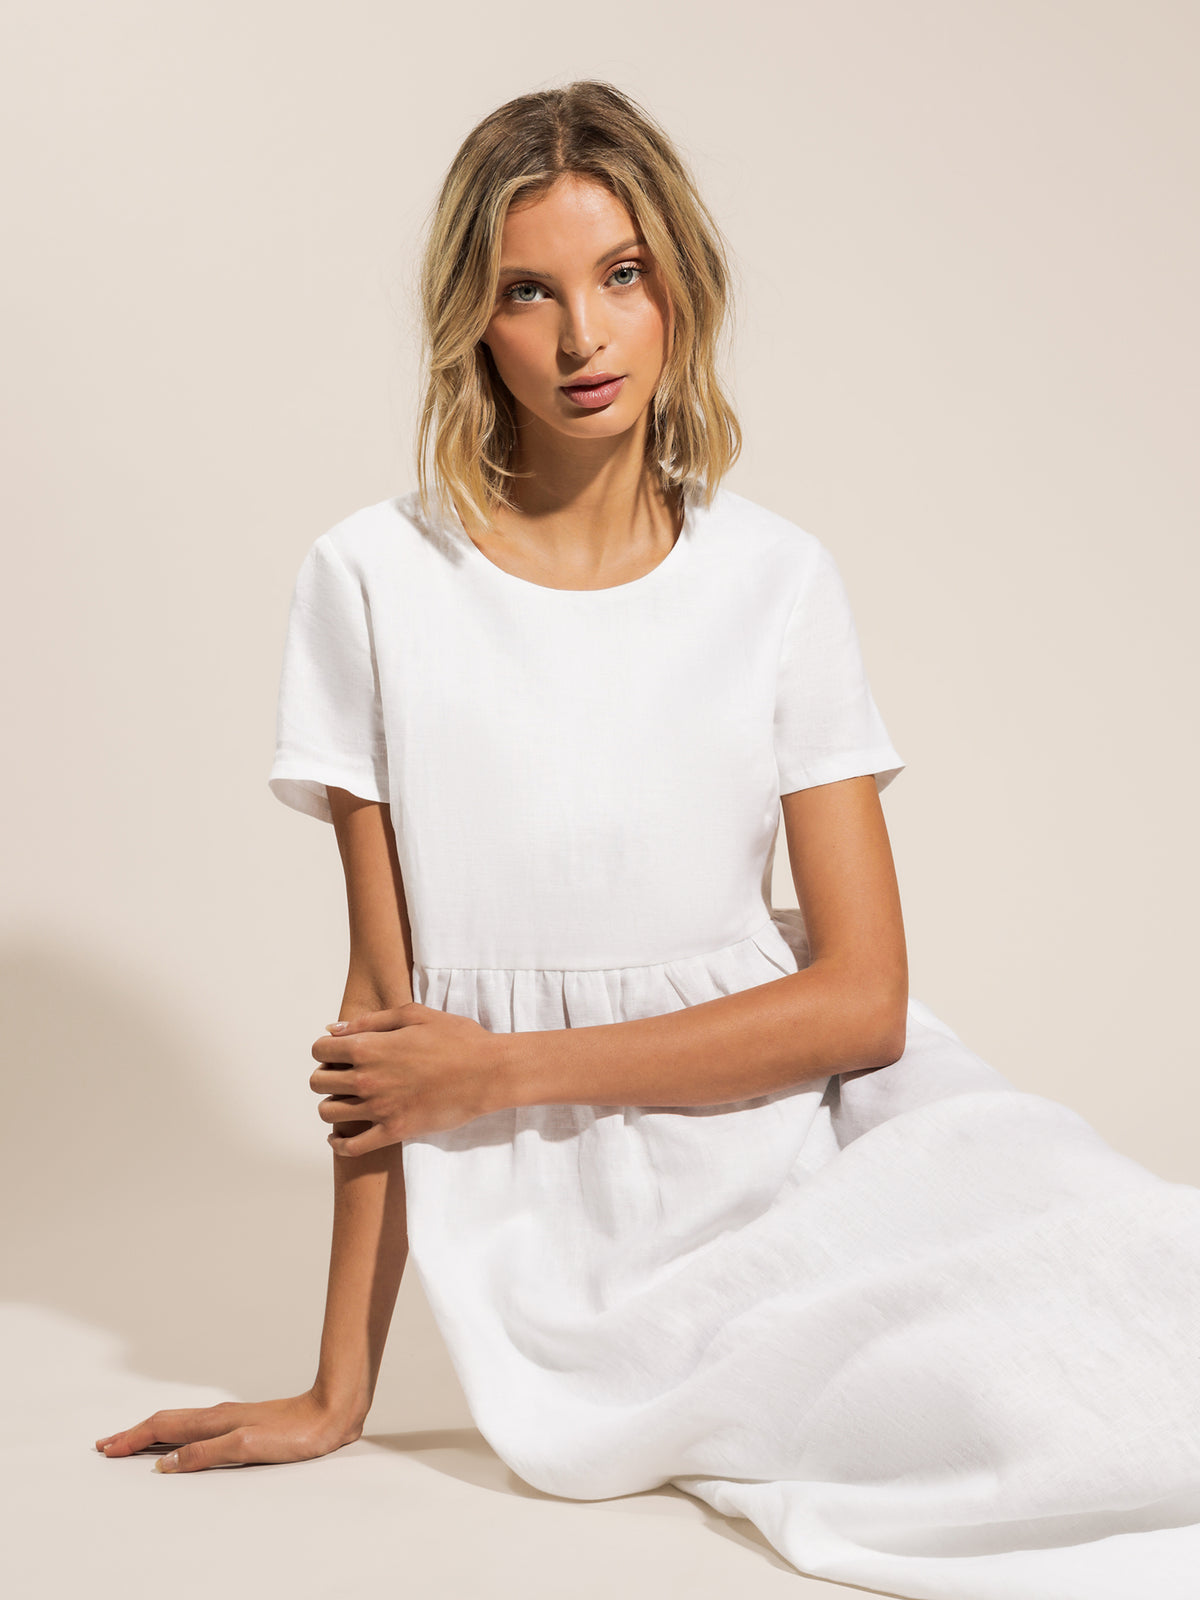 Claudia Linen Maxi Dress in White